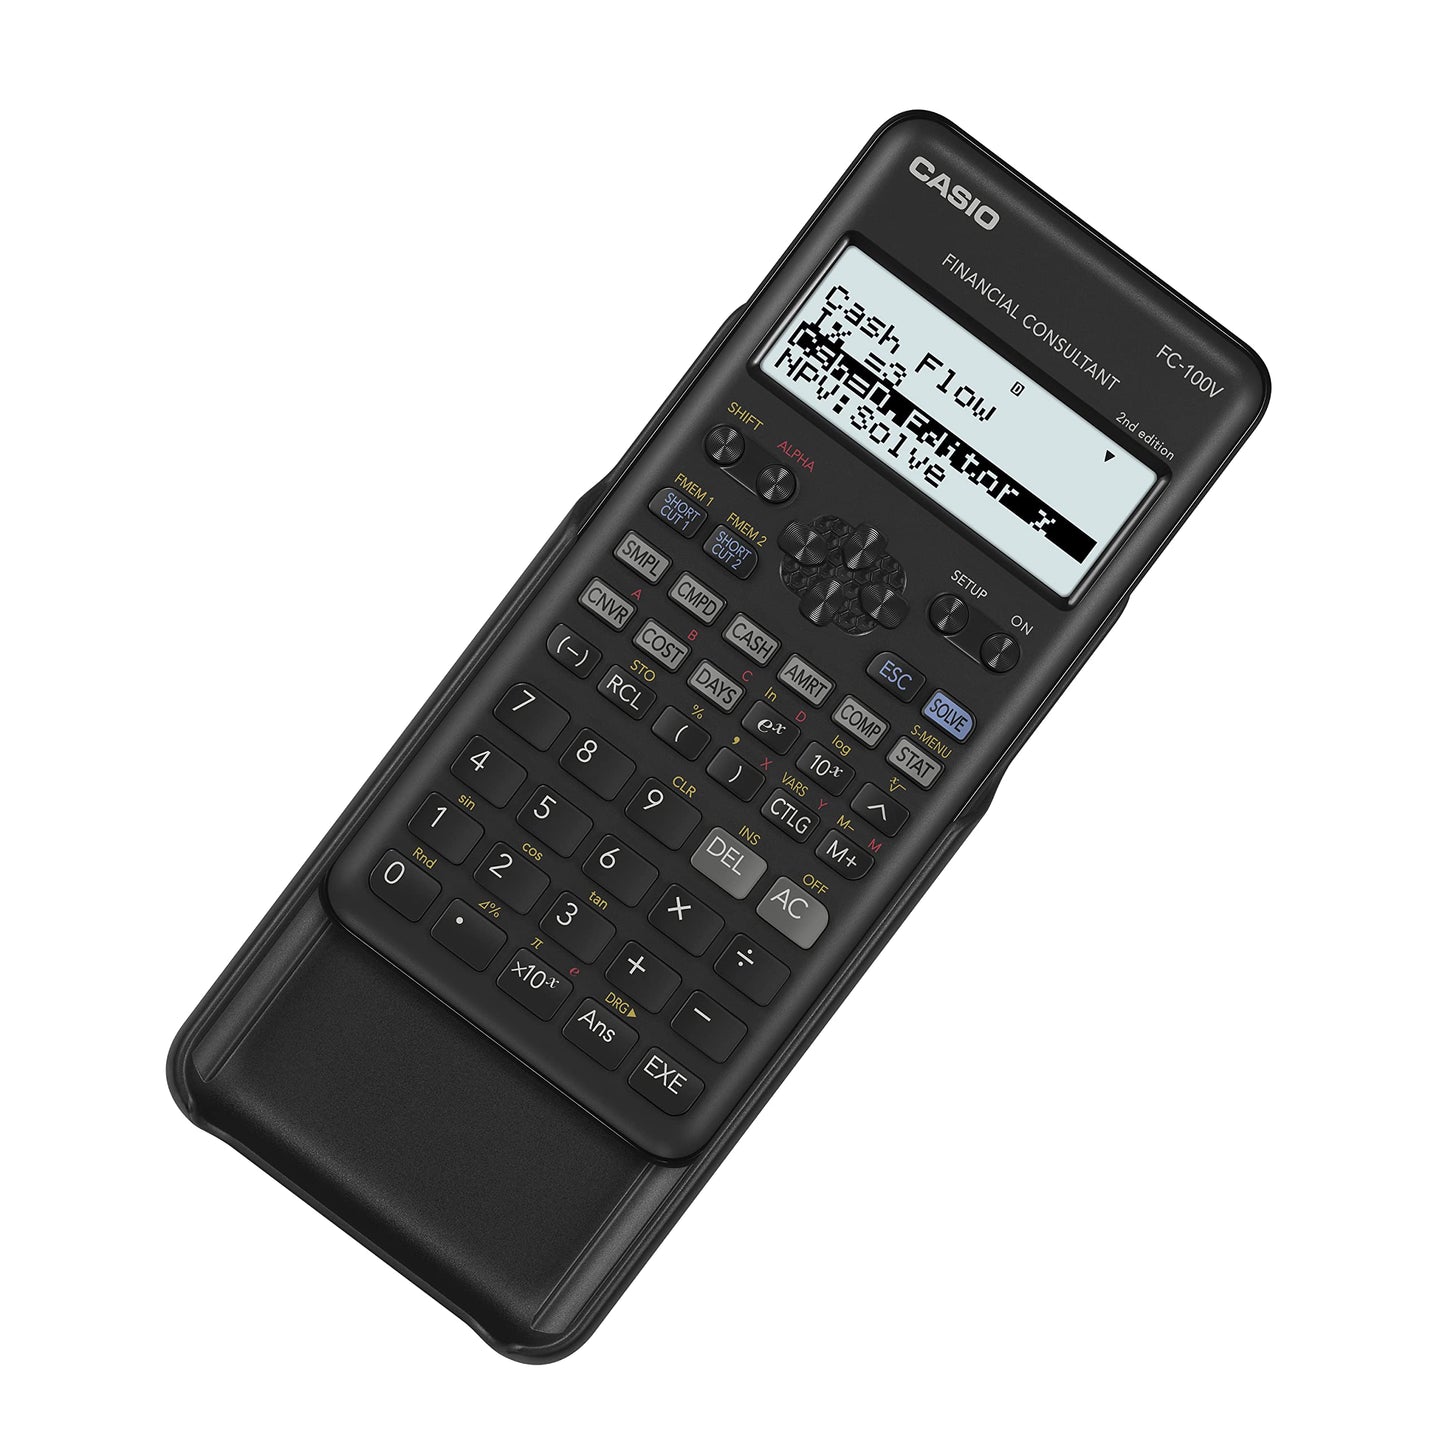 Casio FC-100V-2, Financial Calculator Second Edition, FC-100V-2-W-ET